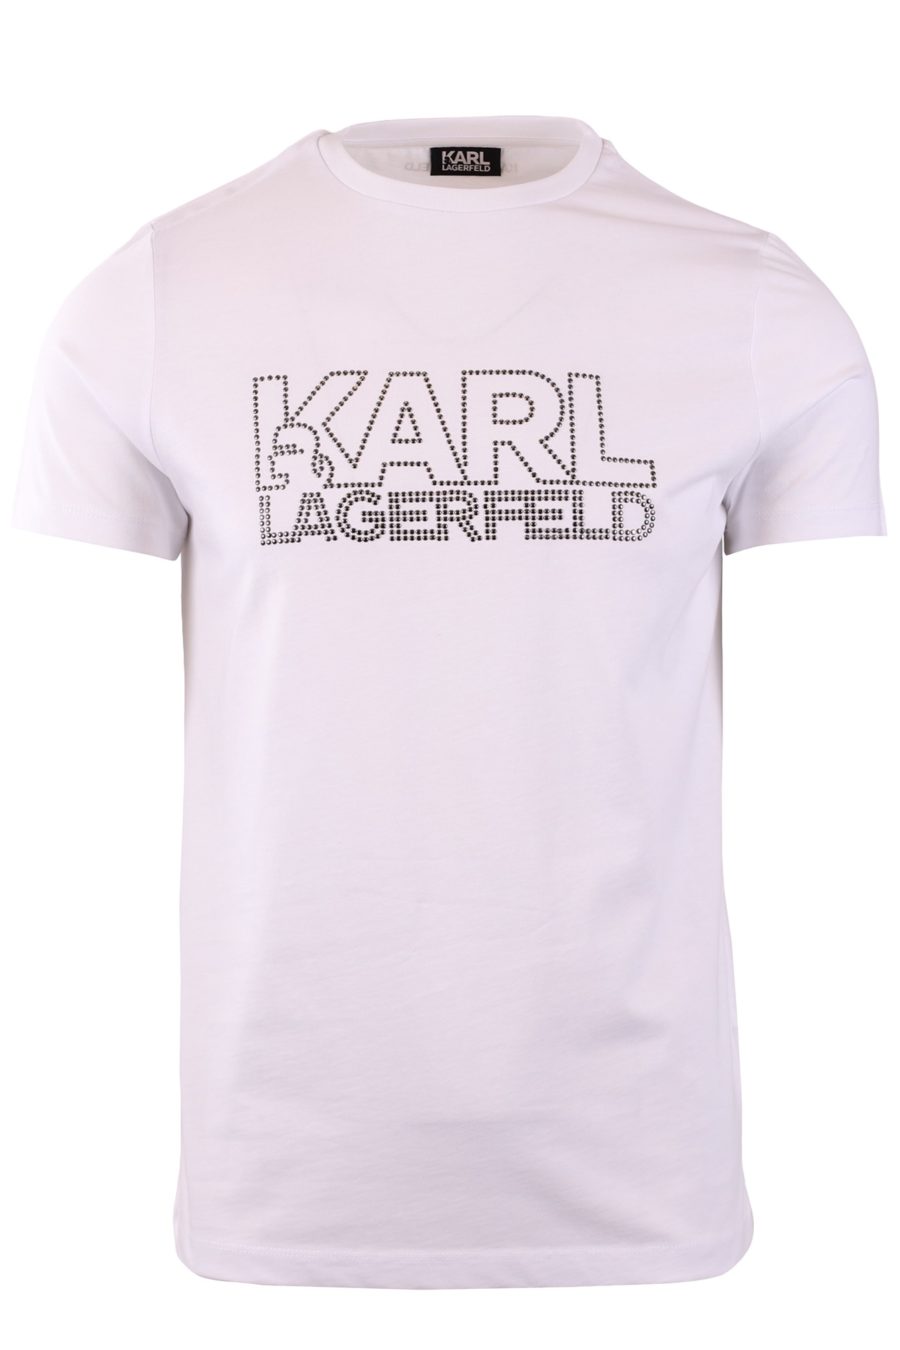 T-shirt branca com tachas "Karl" - 44098668bc051048a362eddf83e317dd37ec9c6f